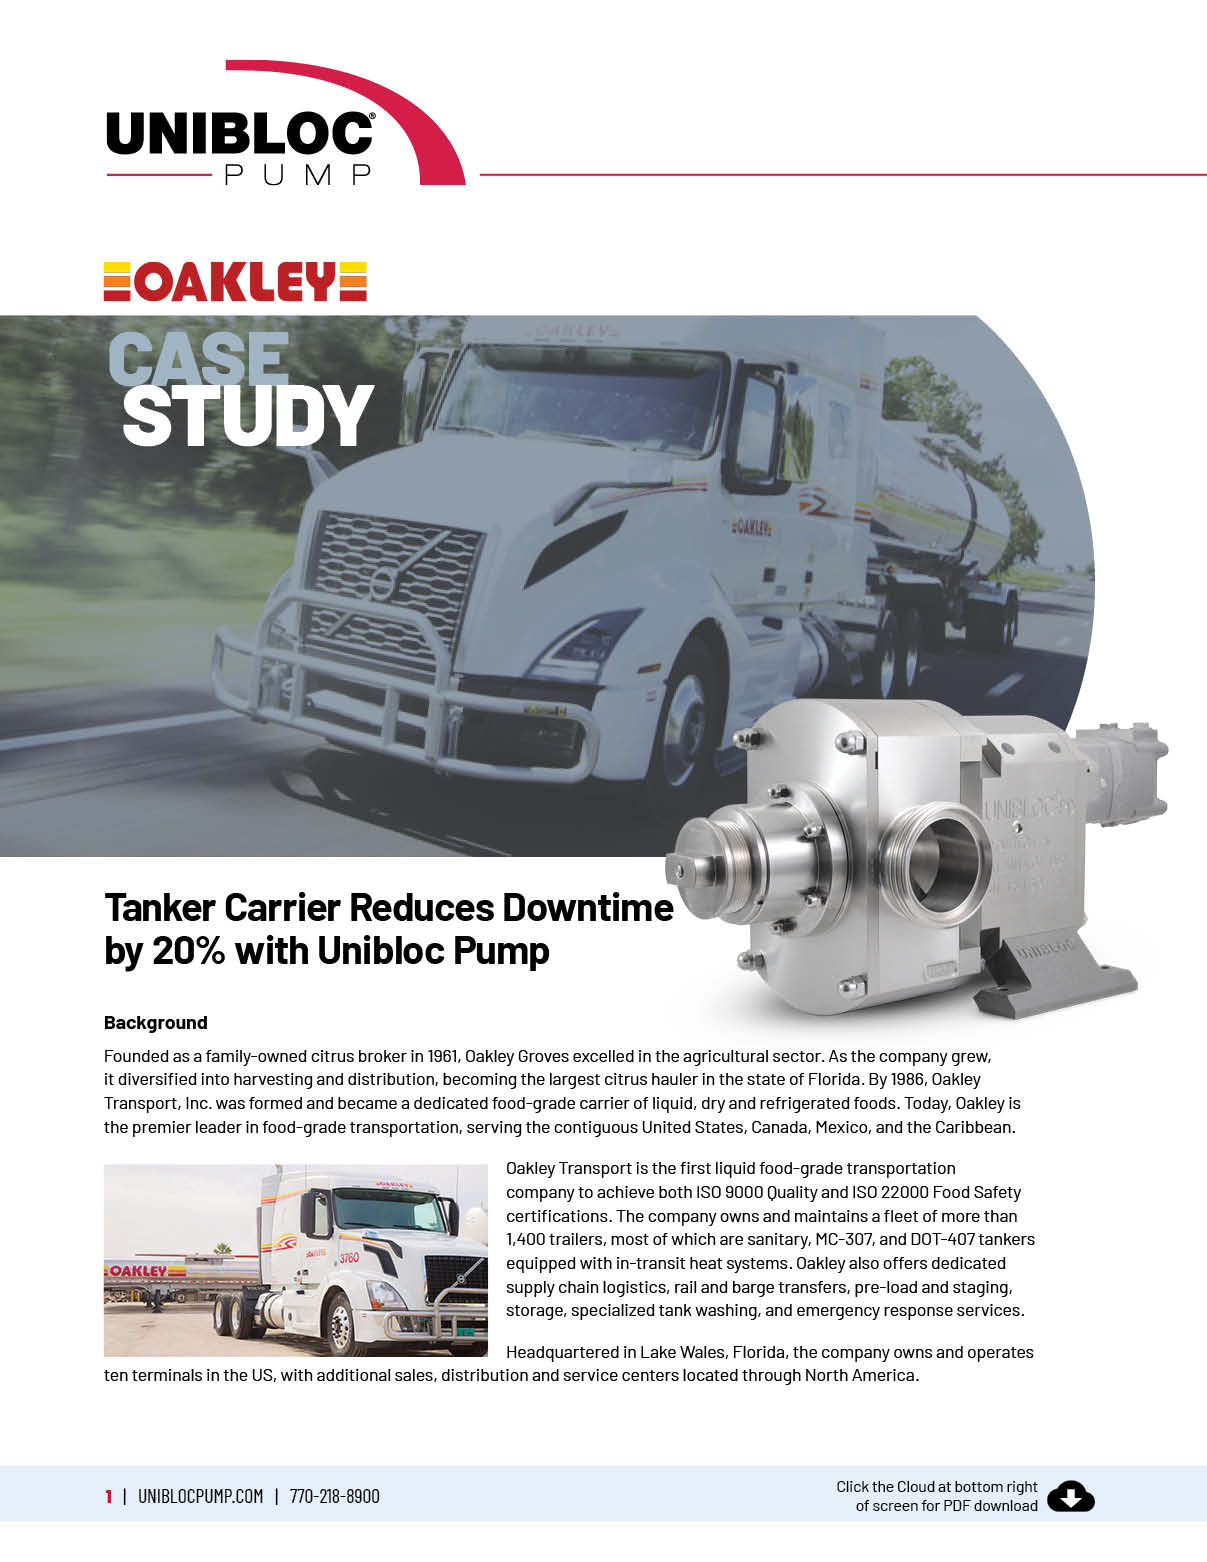 Unibloc Pump - Tanker Carrier Reduces Downtime by 20% with Unibloc Pumps